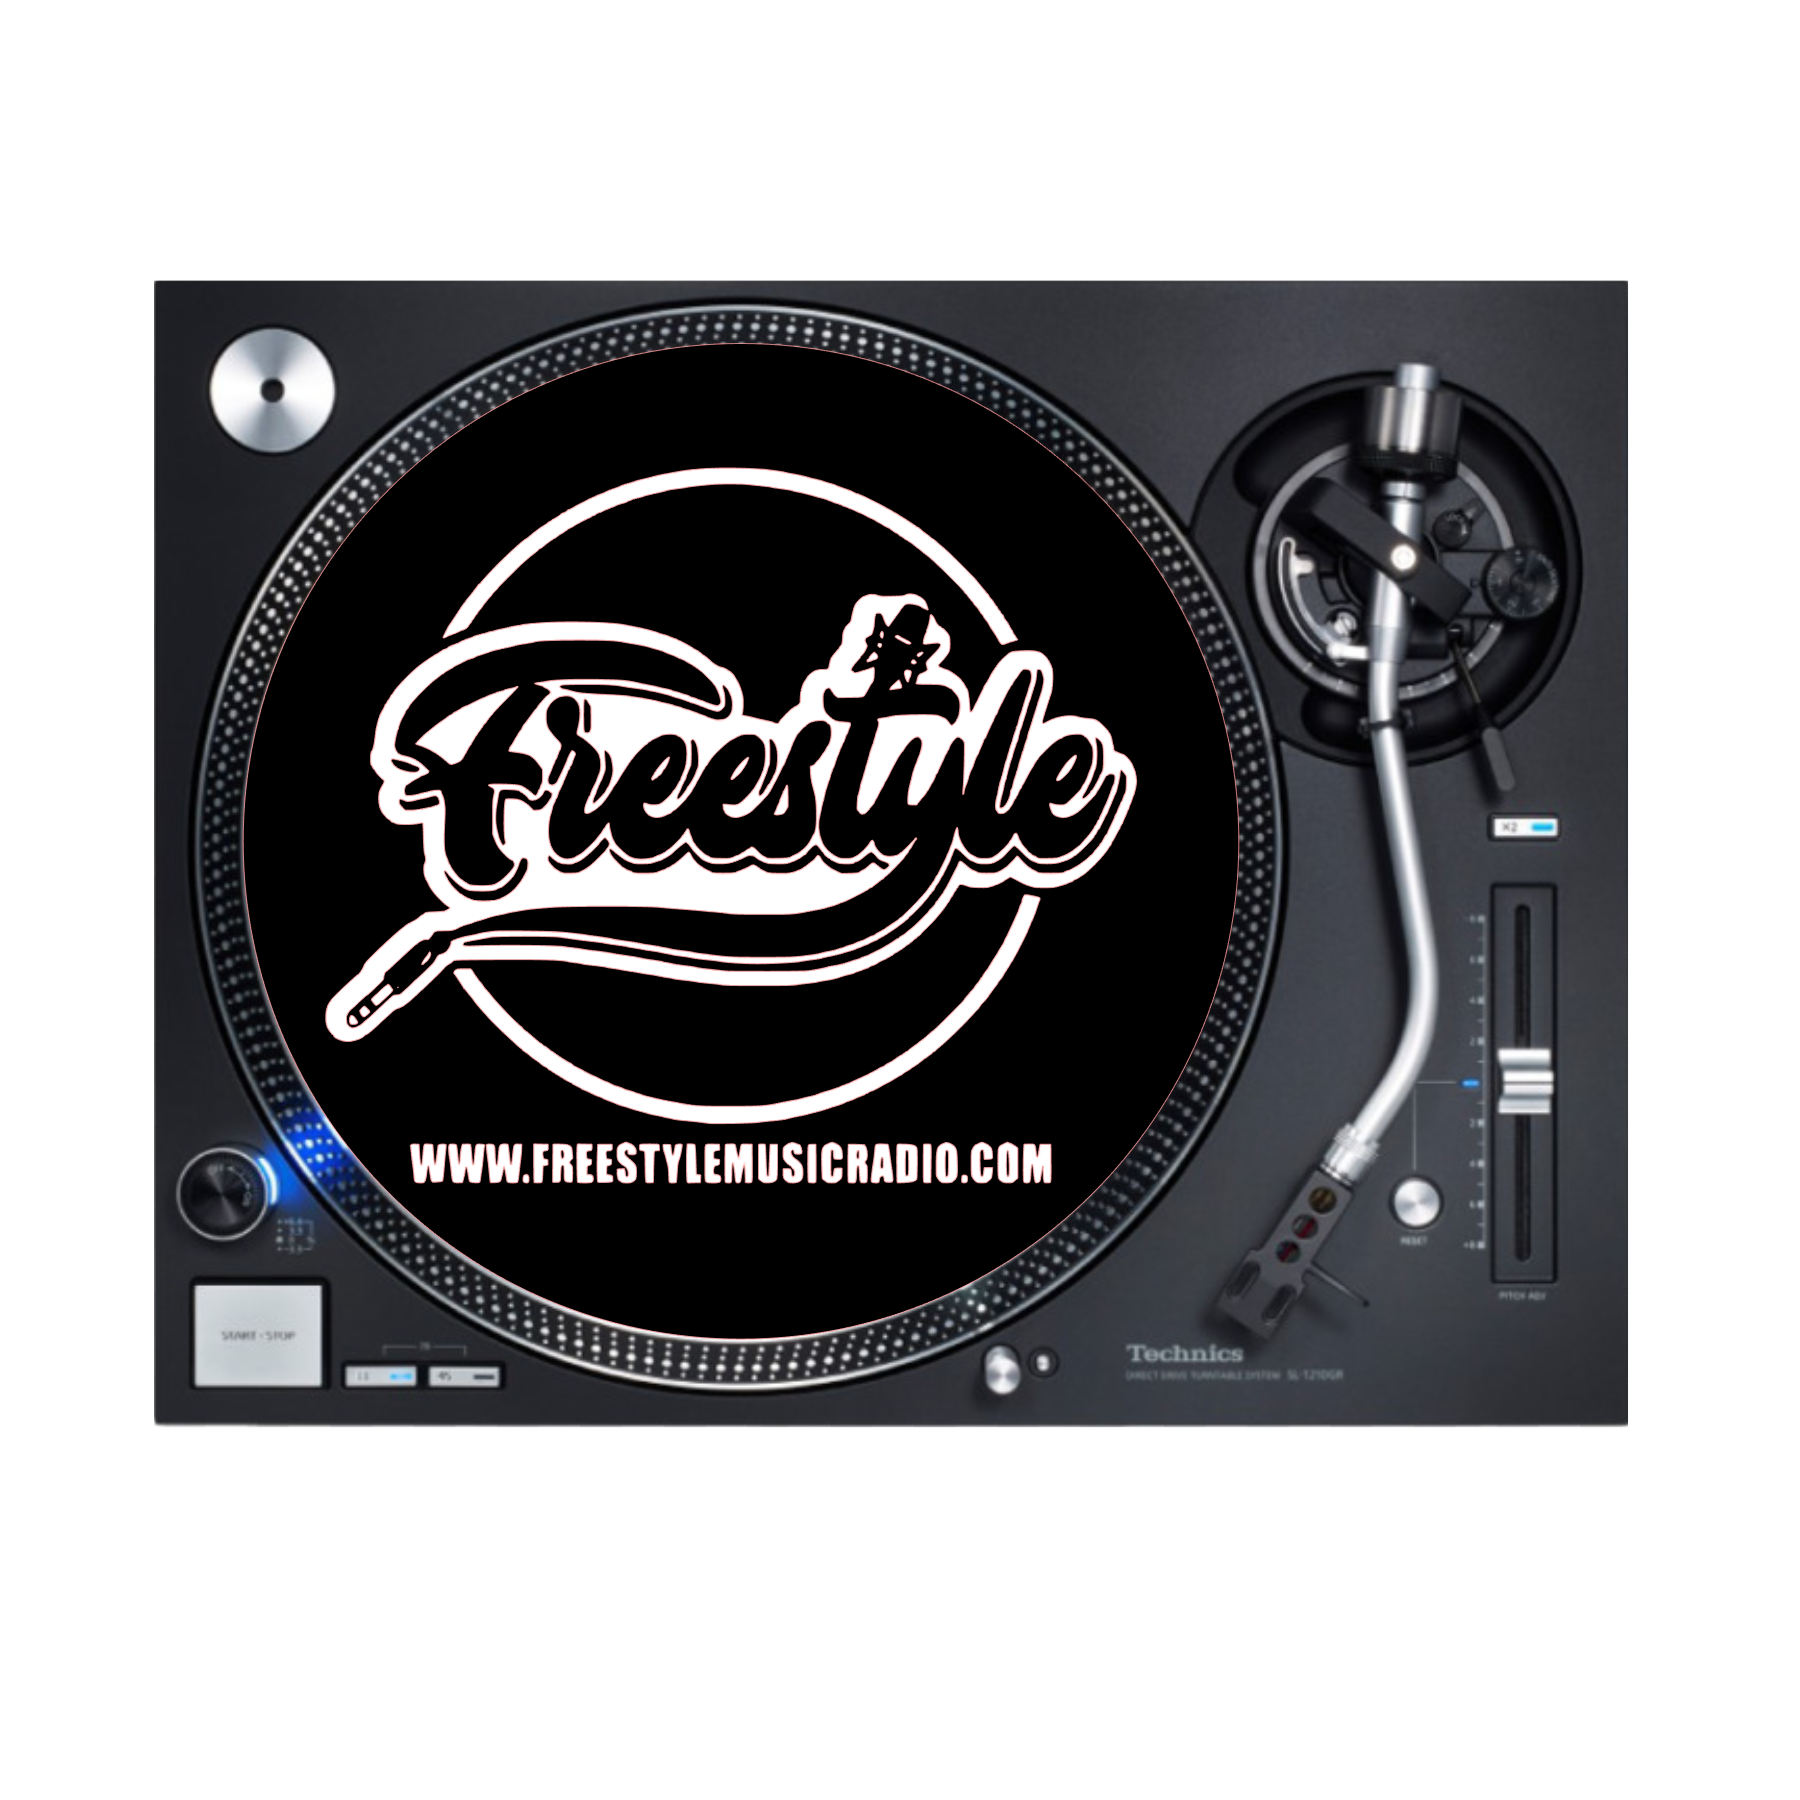 Freestyle Music Radio DJ Slipmats.